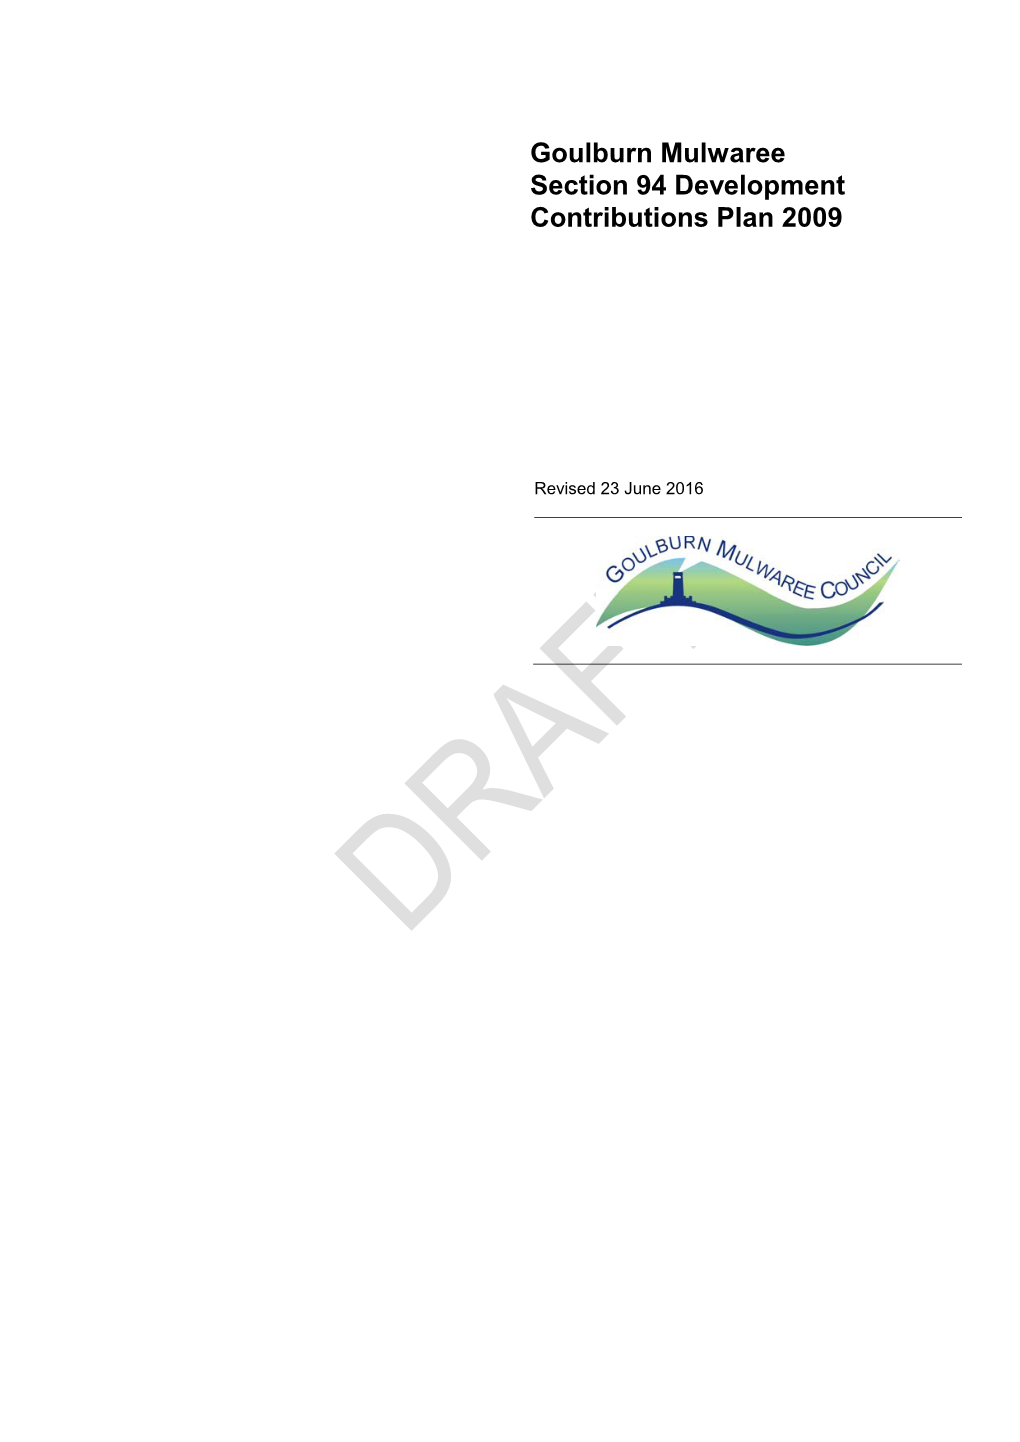 Goulburn Mulwaree Section 94 Development Contributions Plan 2009